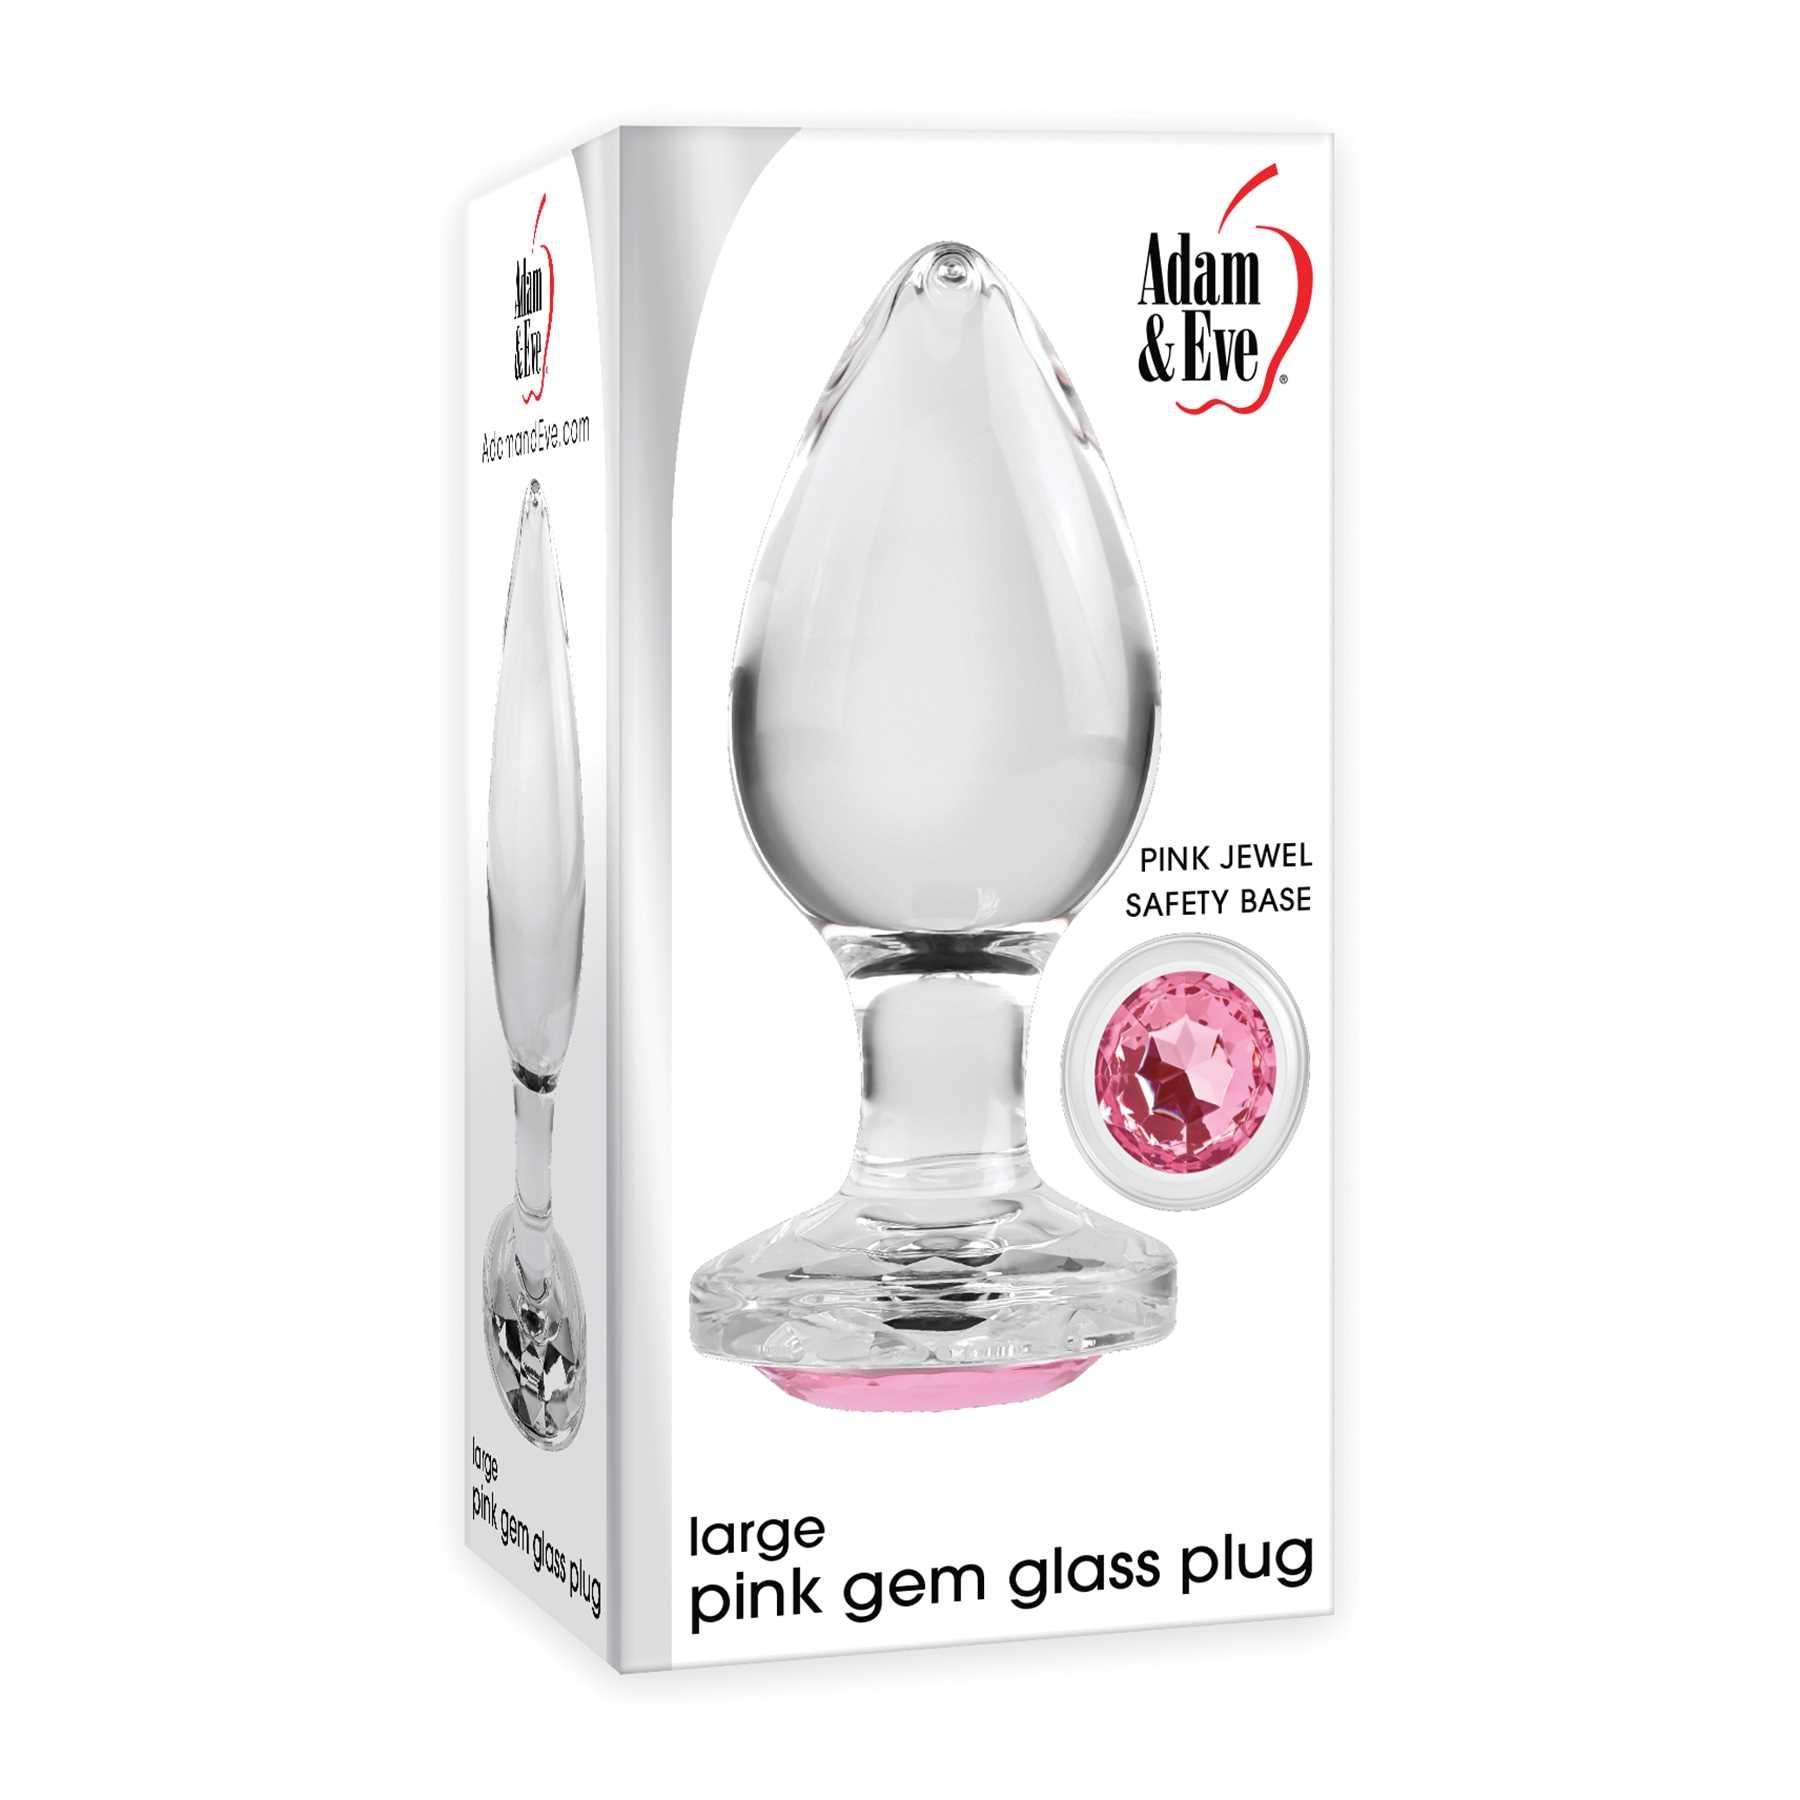 pink gem glass plug box packaging large